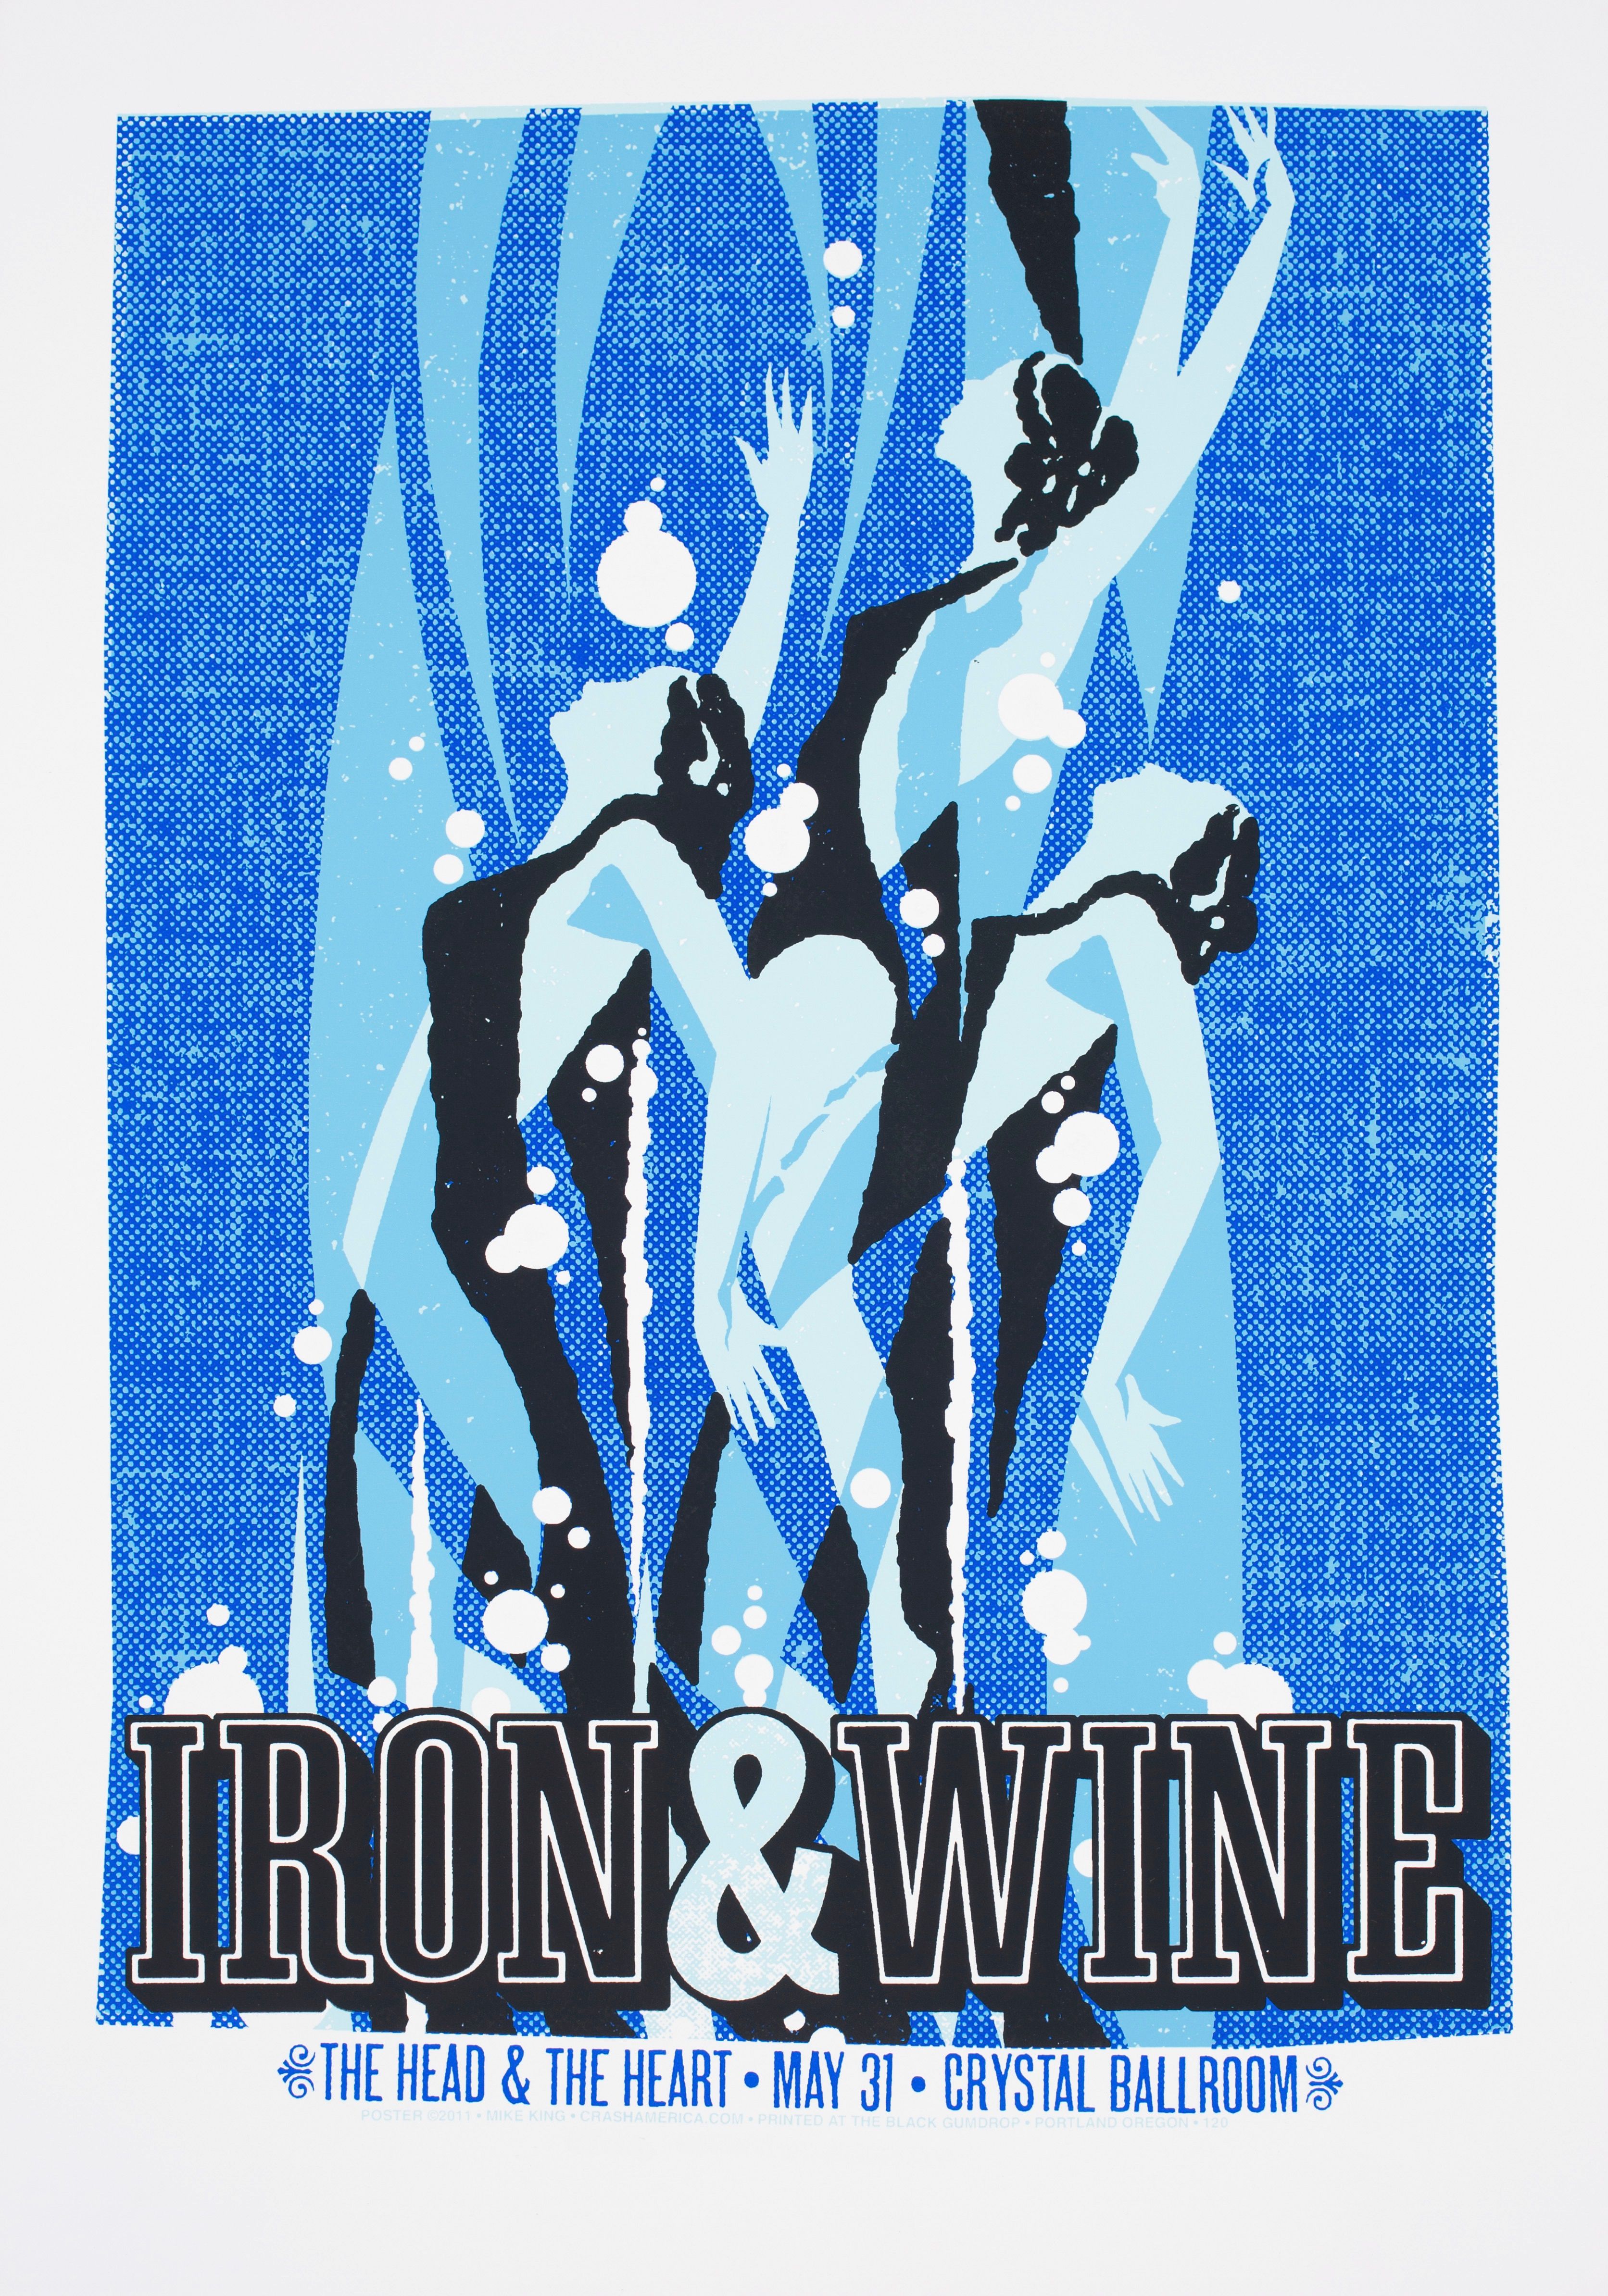 MXP-191.1 Iron And Wine 2011 Crystal Ballroom  May 31 Concert Poster